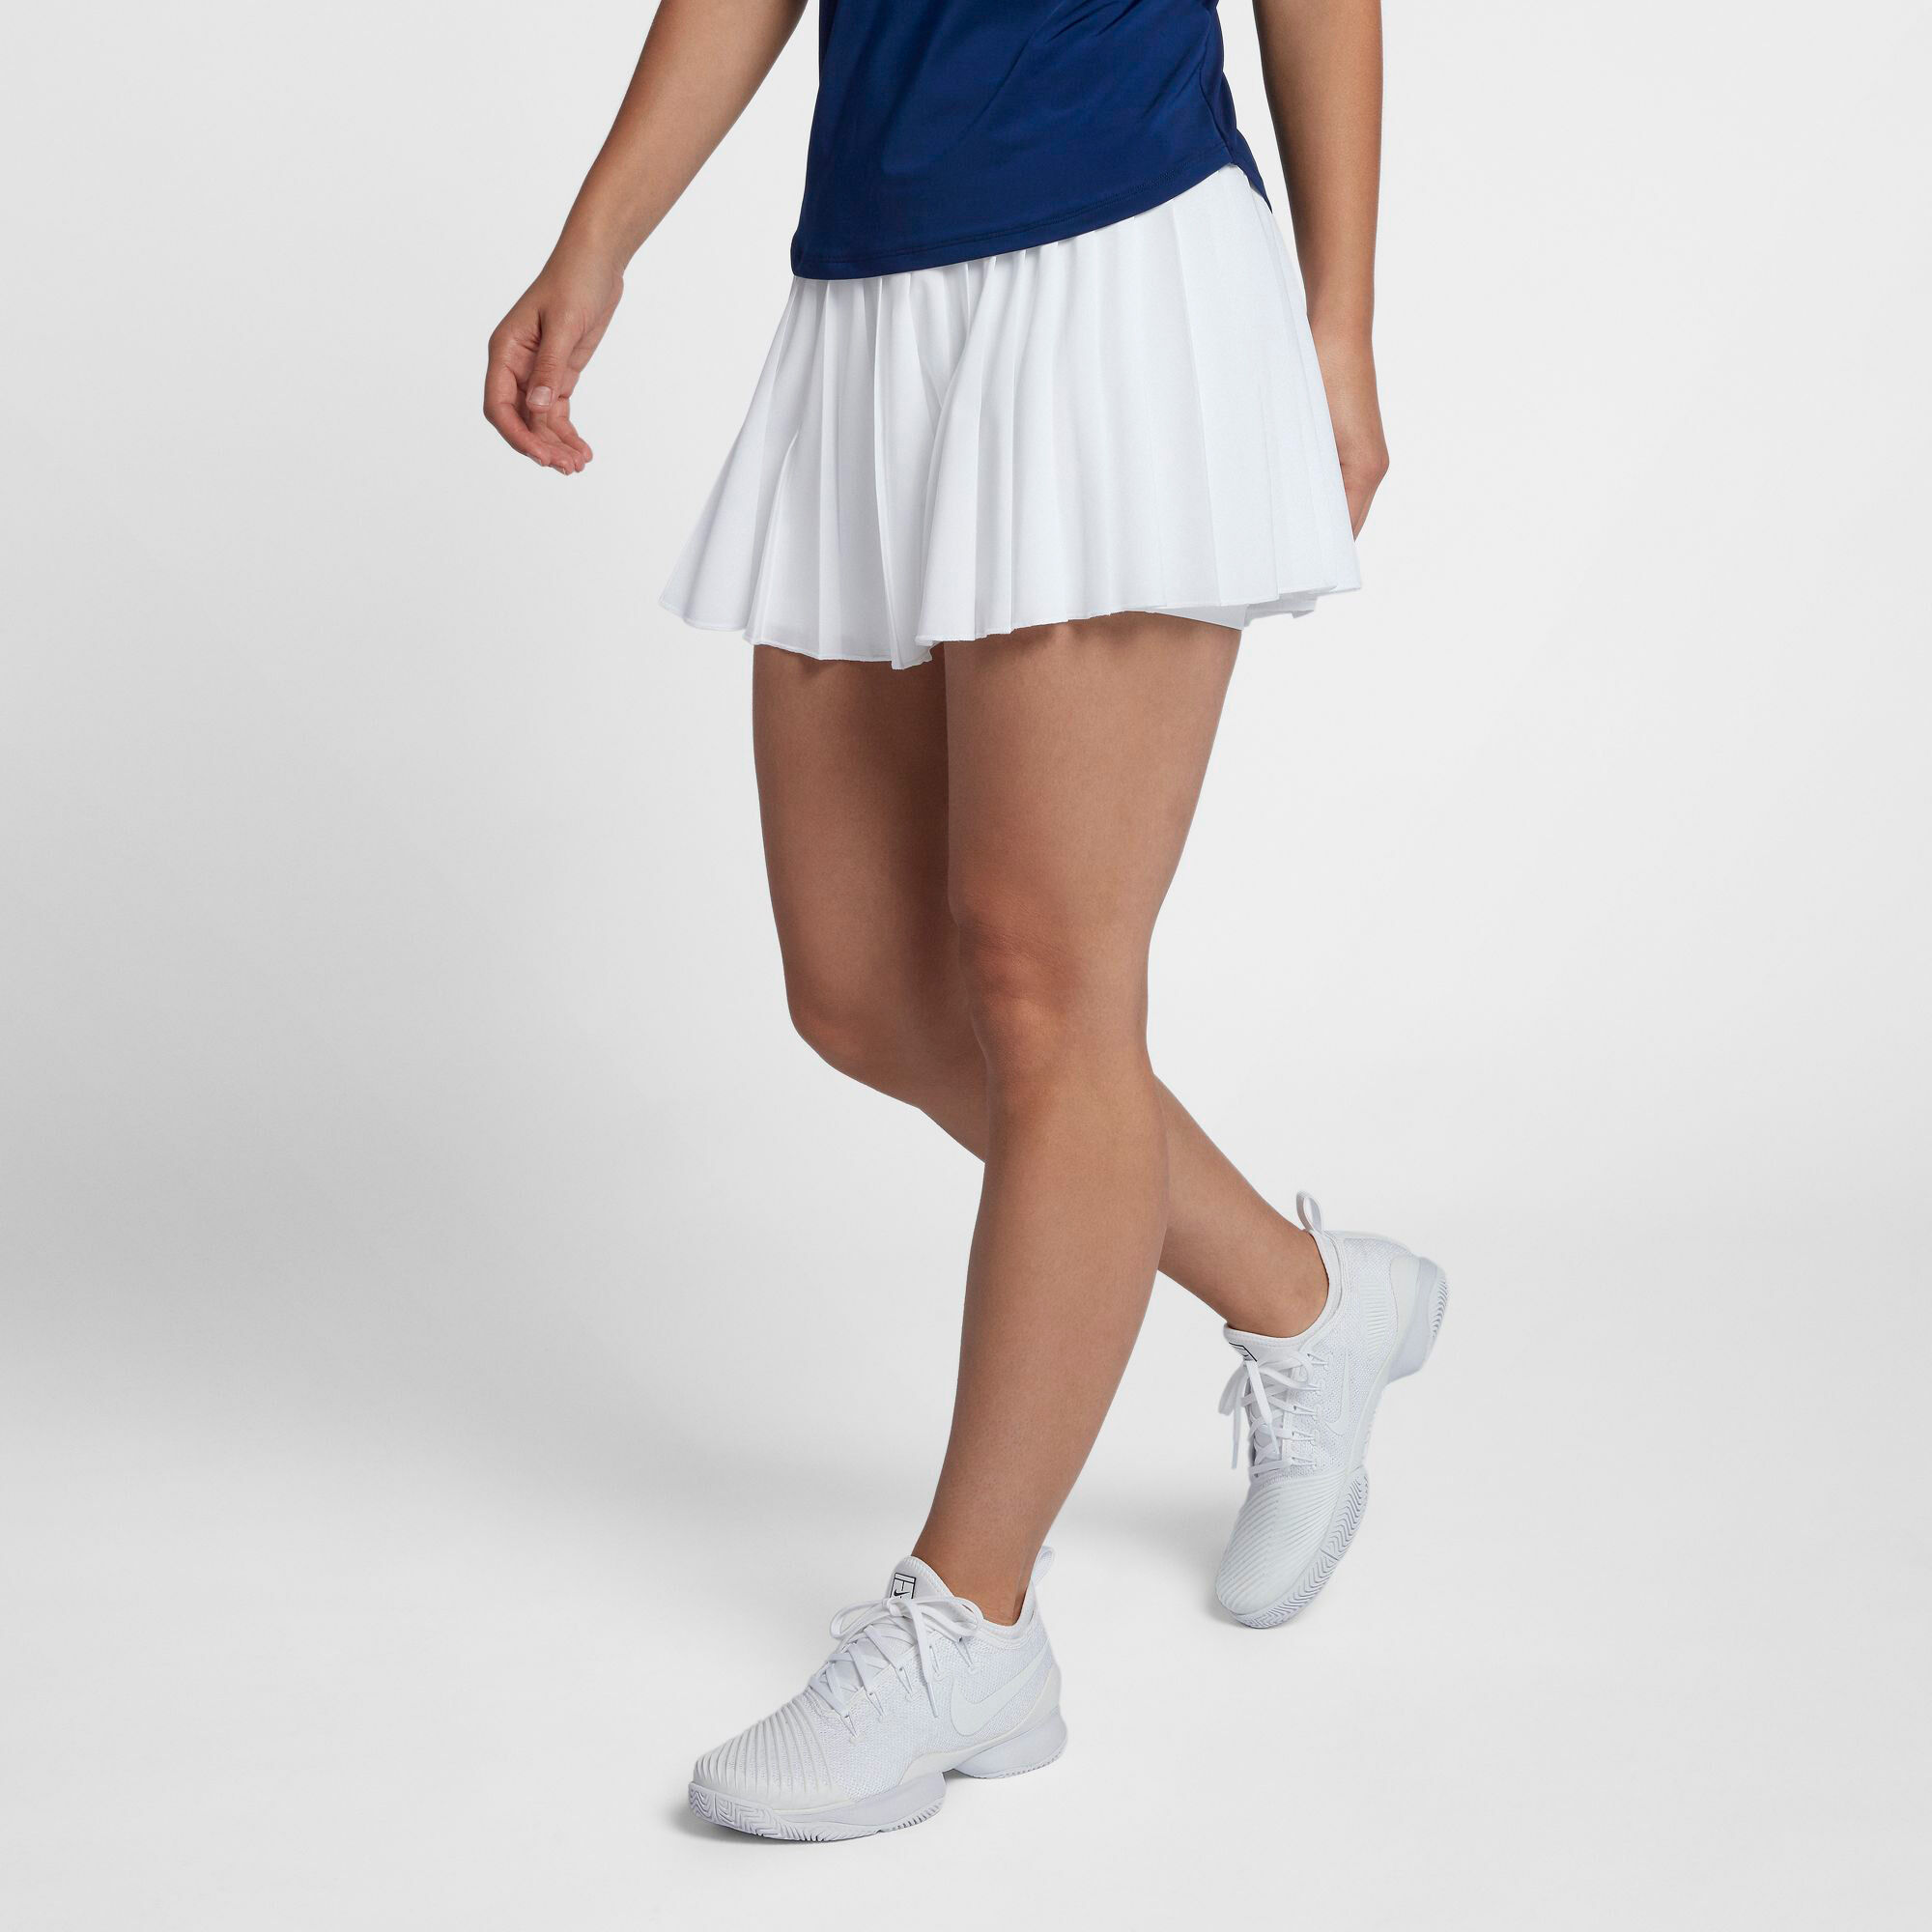 Юбка найк. Nike Court Victory skirt. Юбка Nike Victory Court skirt. Nike теннисная юбка 2020. Nike Tennis women skirts Victory.